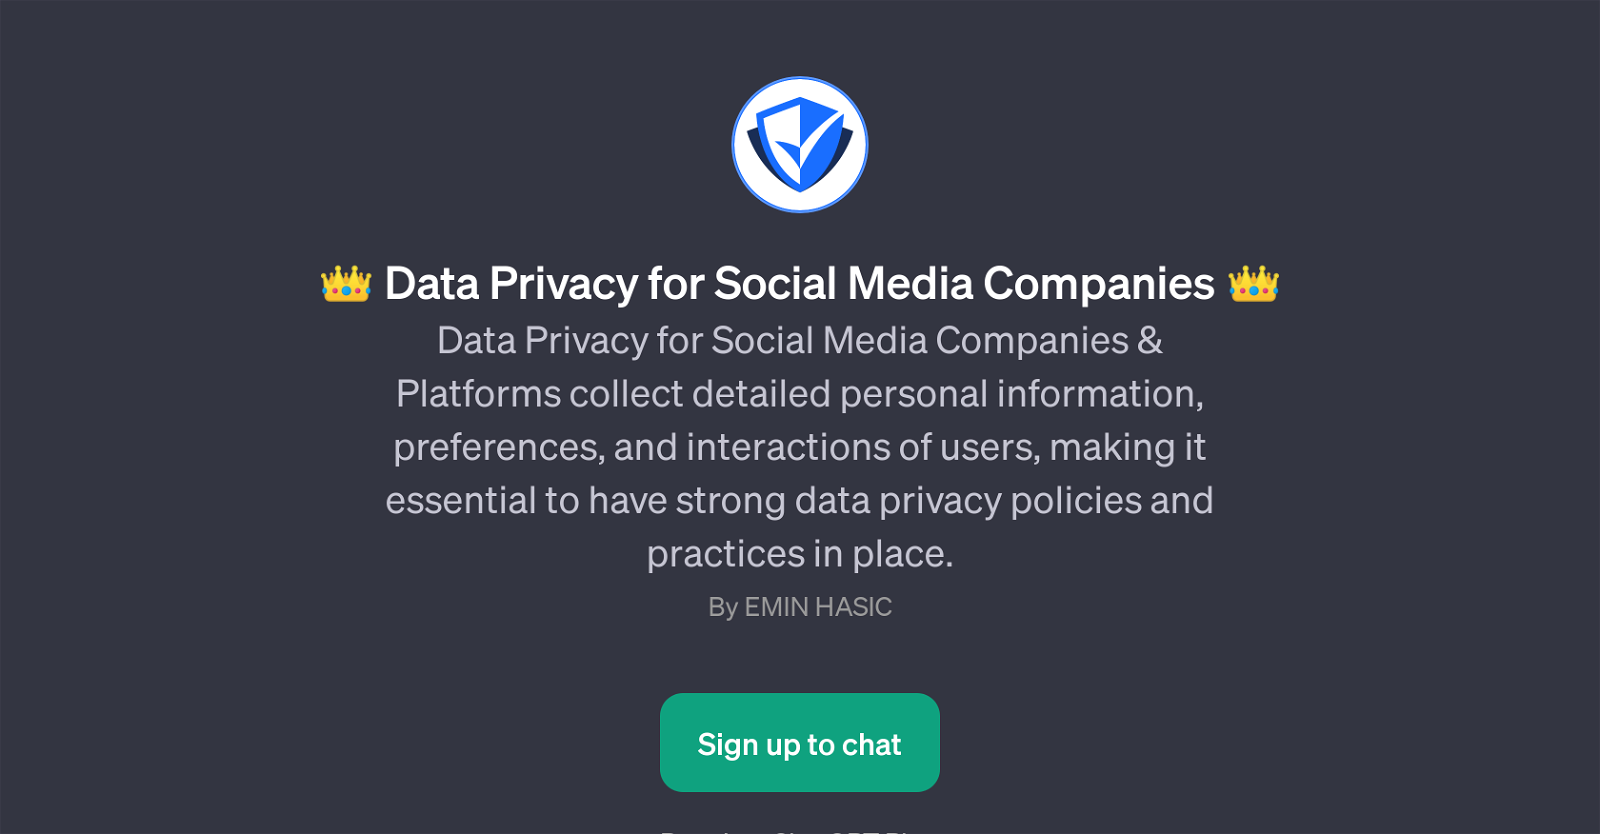 Data Privacy for Social Media Companies website